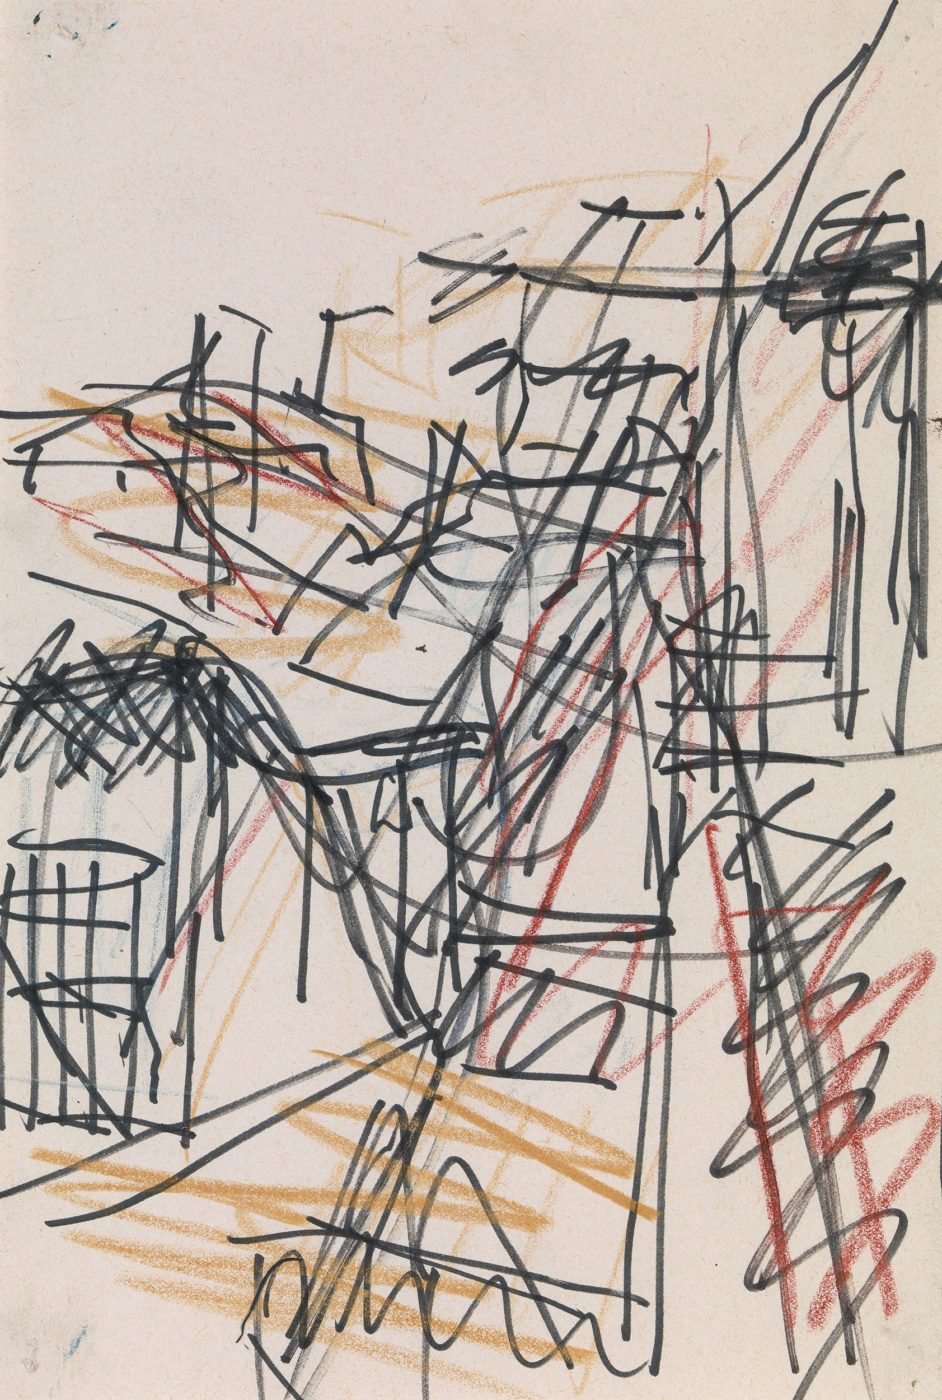 Frank Auerbach (b. 1931), To the Studios